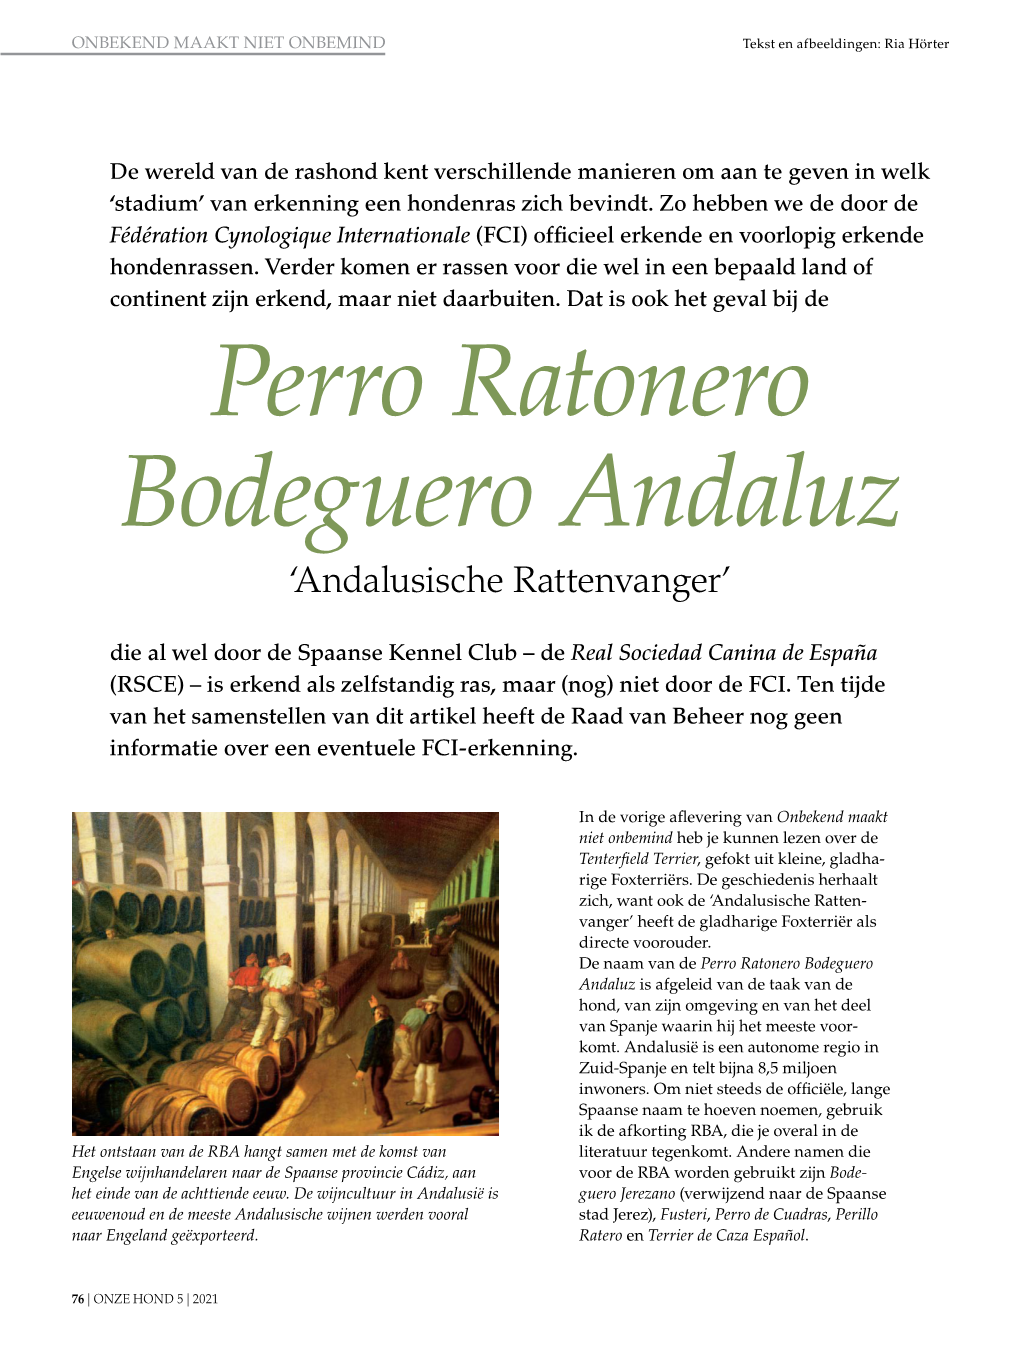 Perro Ratonero Bodeguero Andaluz ‘Andalusische Rattenvanger’